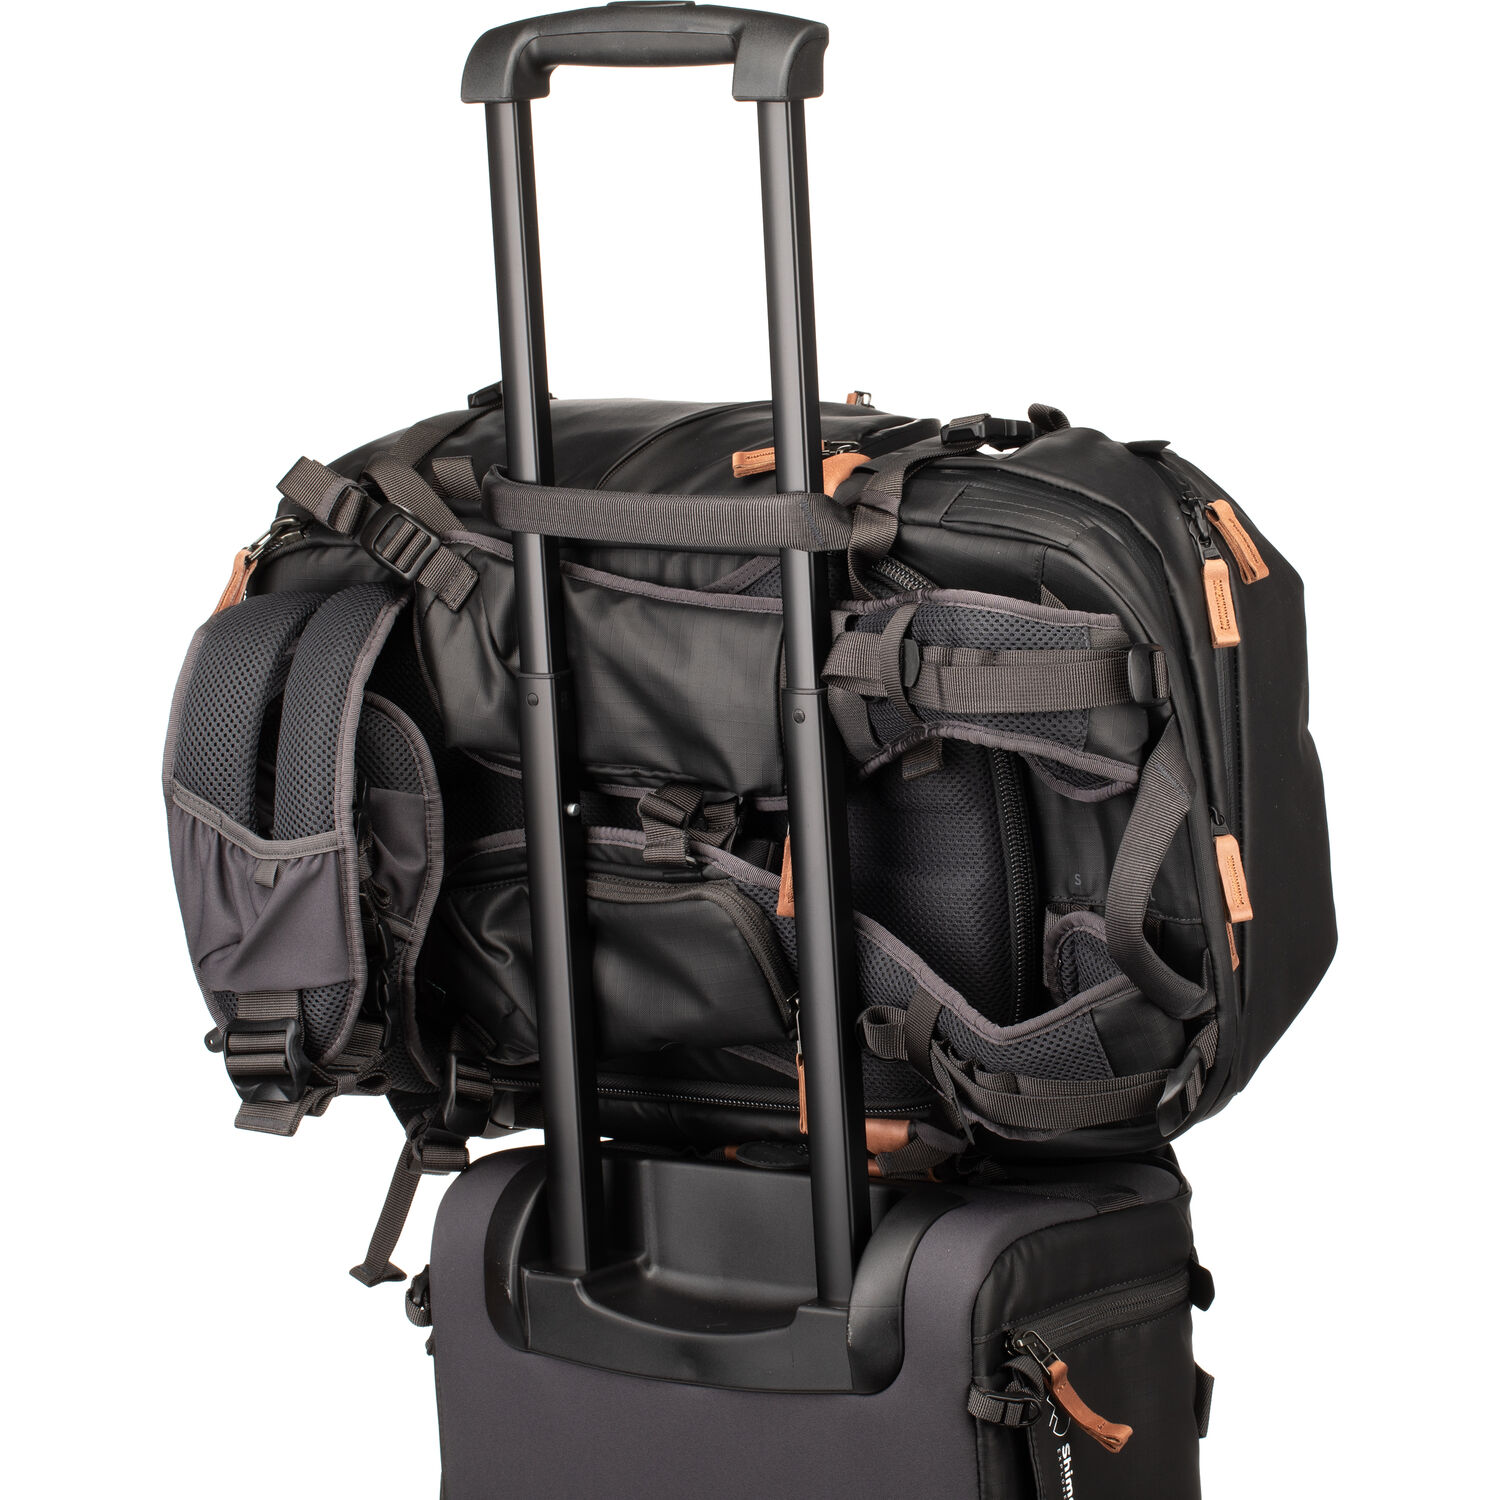  Backpack Shimoda Explore V2 30 black